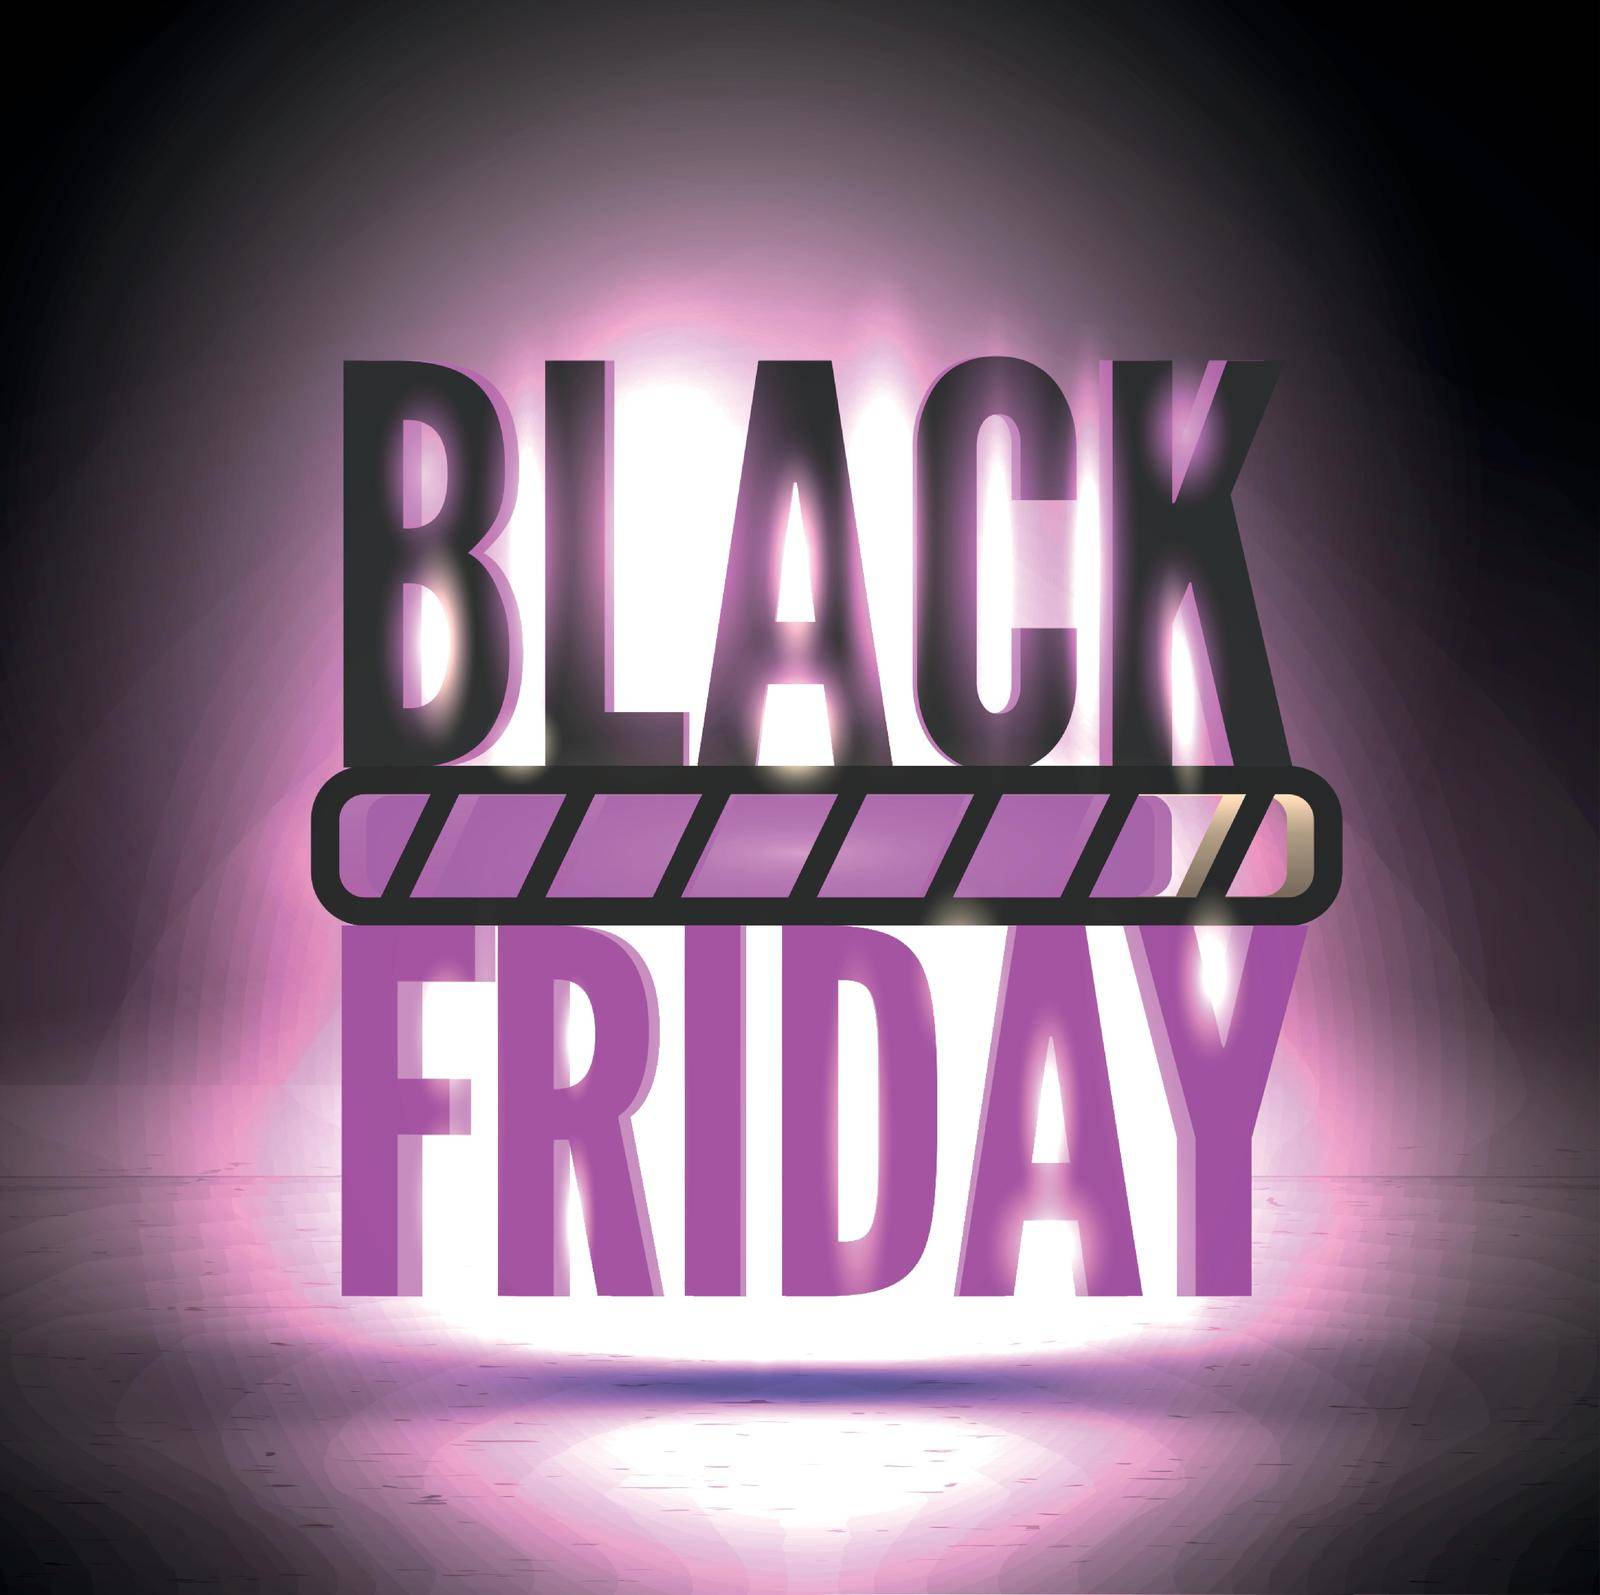 Black friday sale offer with Spotlight illuminated text on dark background vector banner by voinsveta713